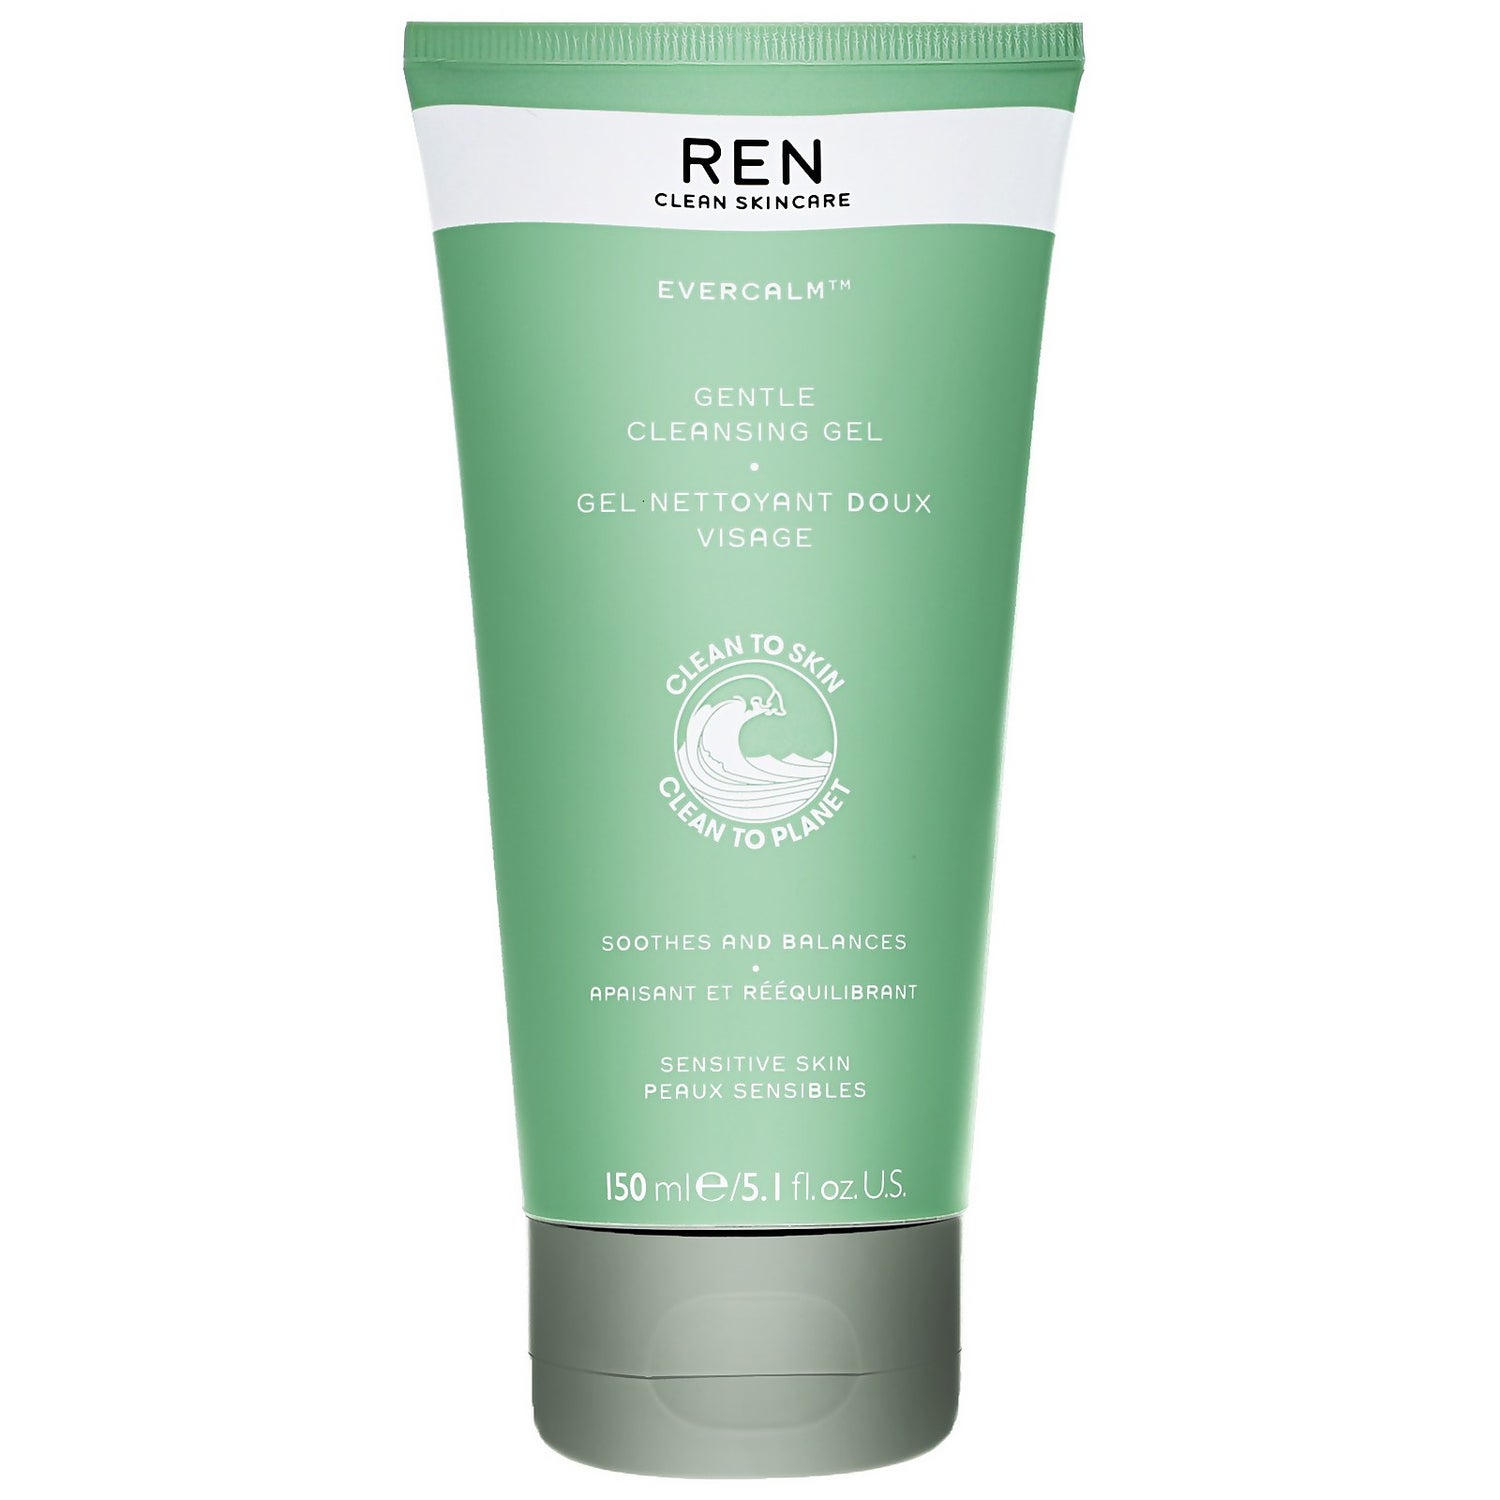 5.1 allbeauty Face Clean 150ml REN Skincare Cleansing Gel Gentle - Evercalm fl.oz. /